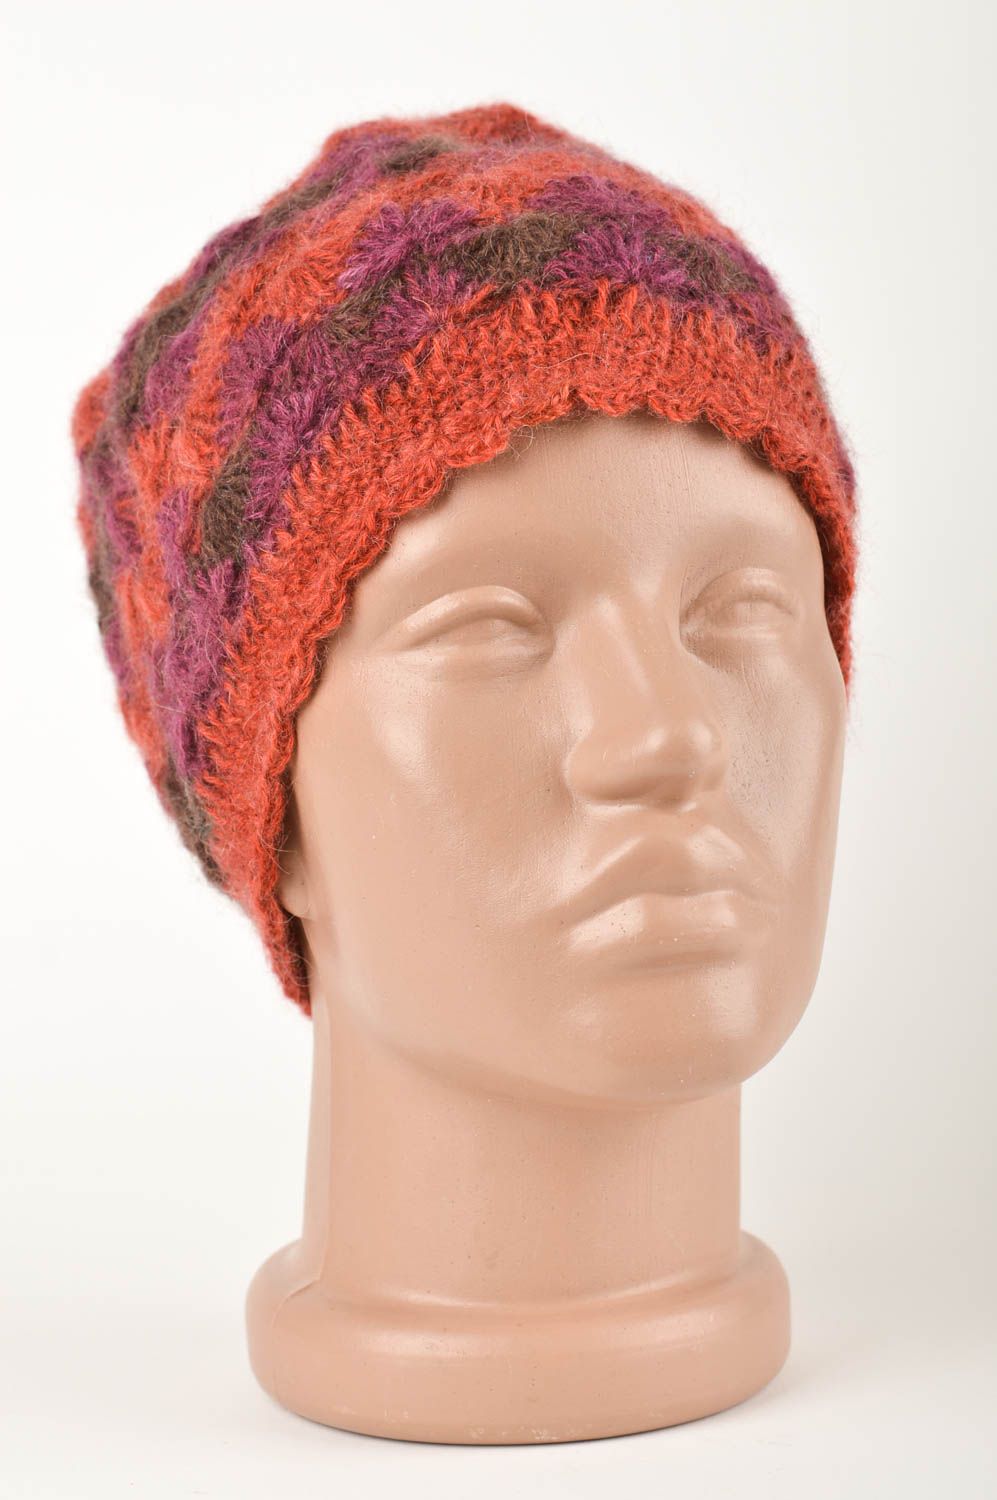 Handmade crocheted hat ladies hats winter hats for women designer accessories photo 1